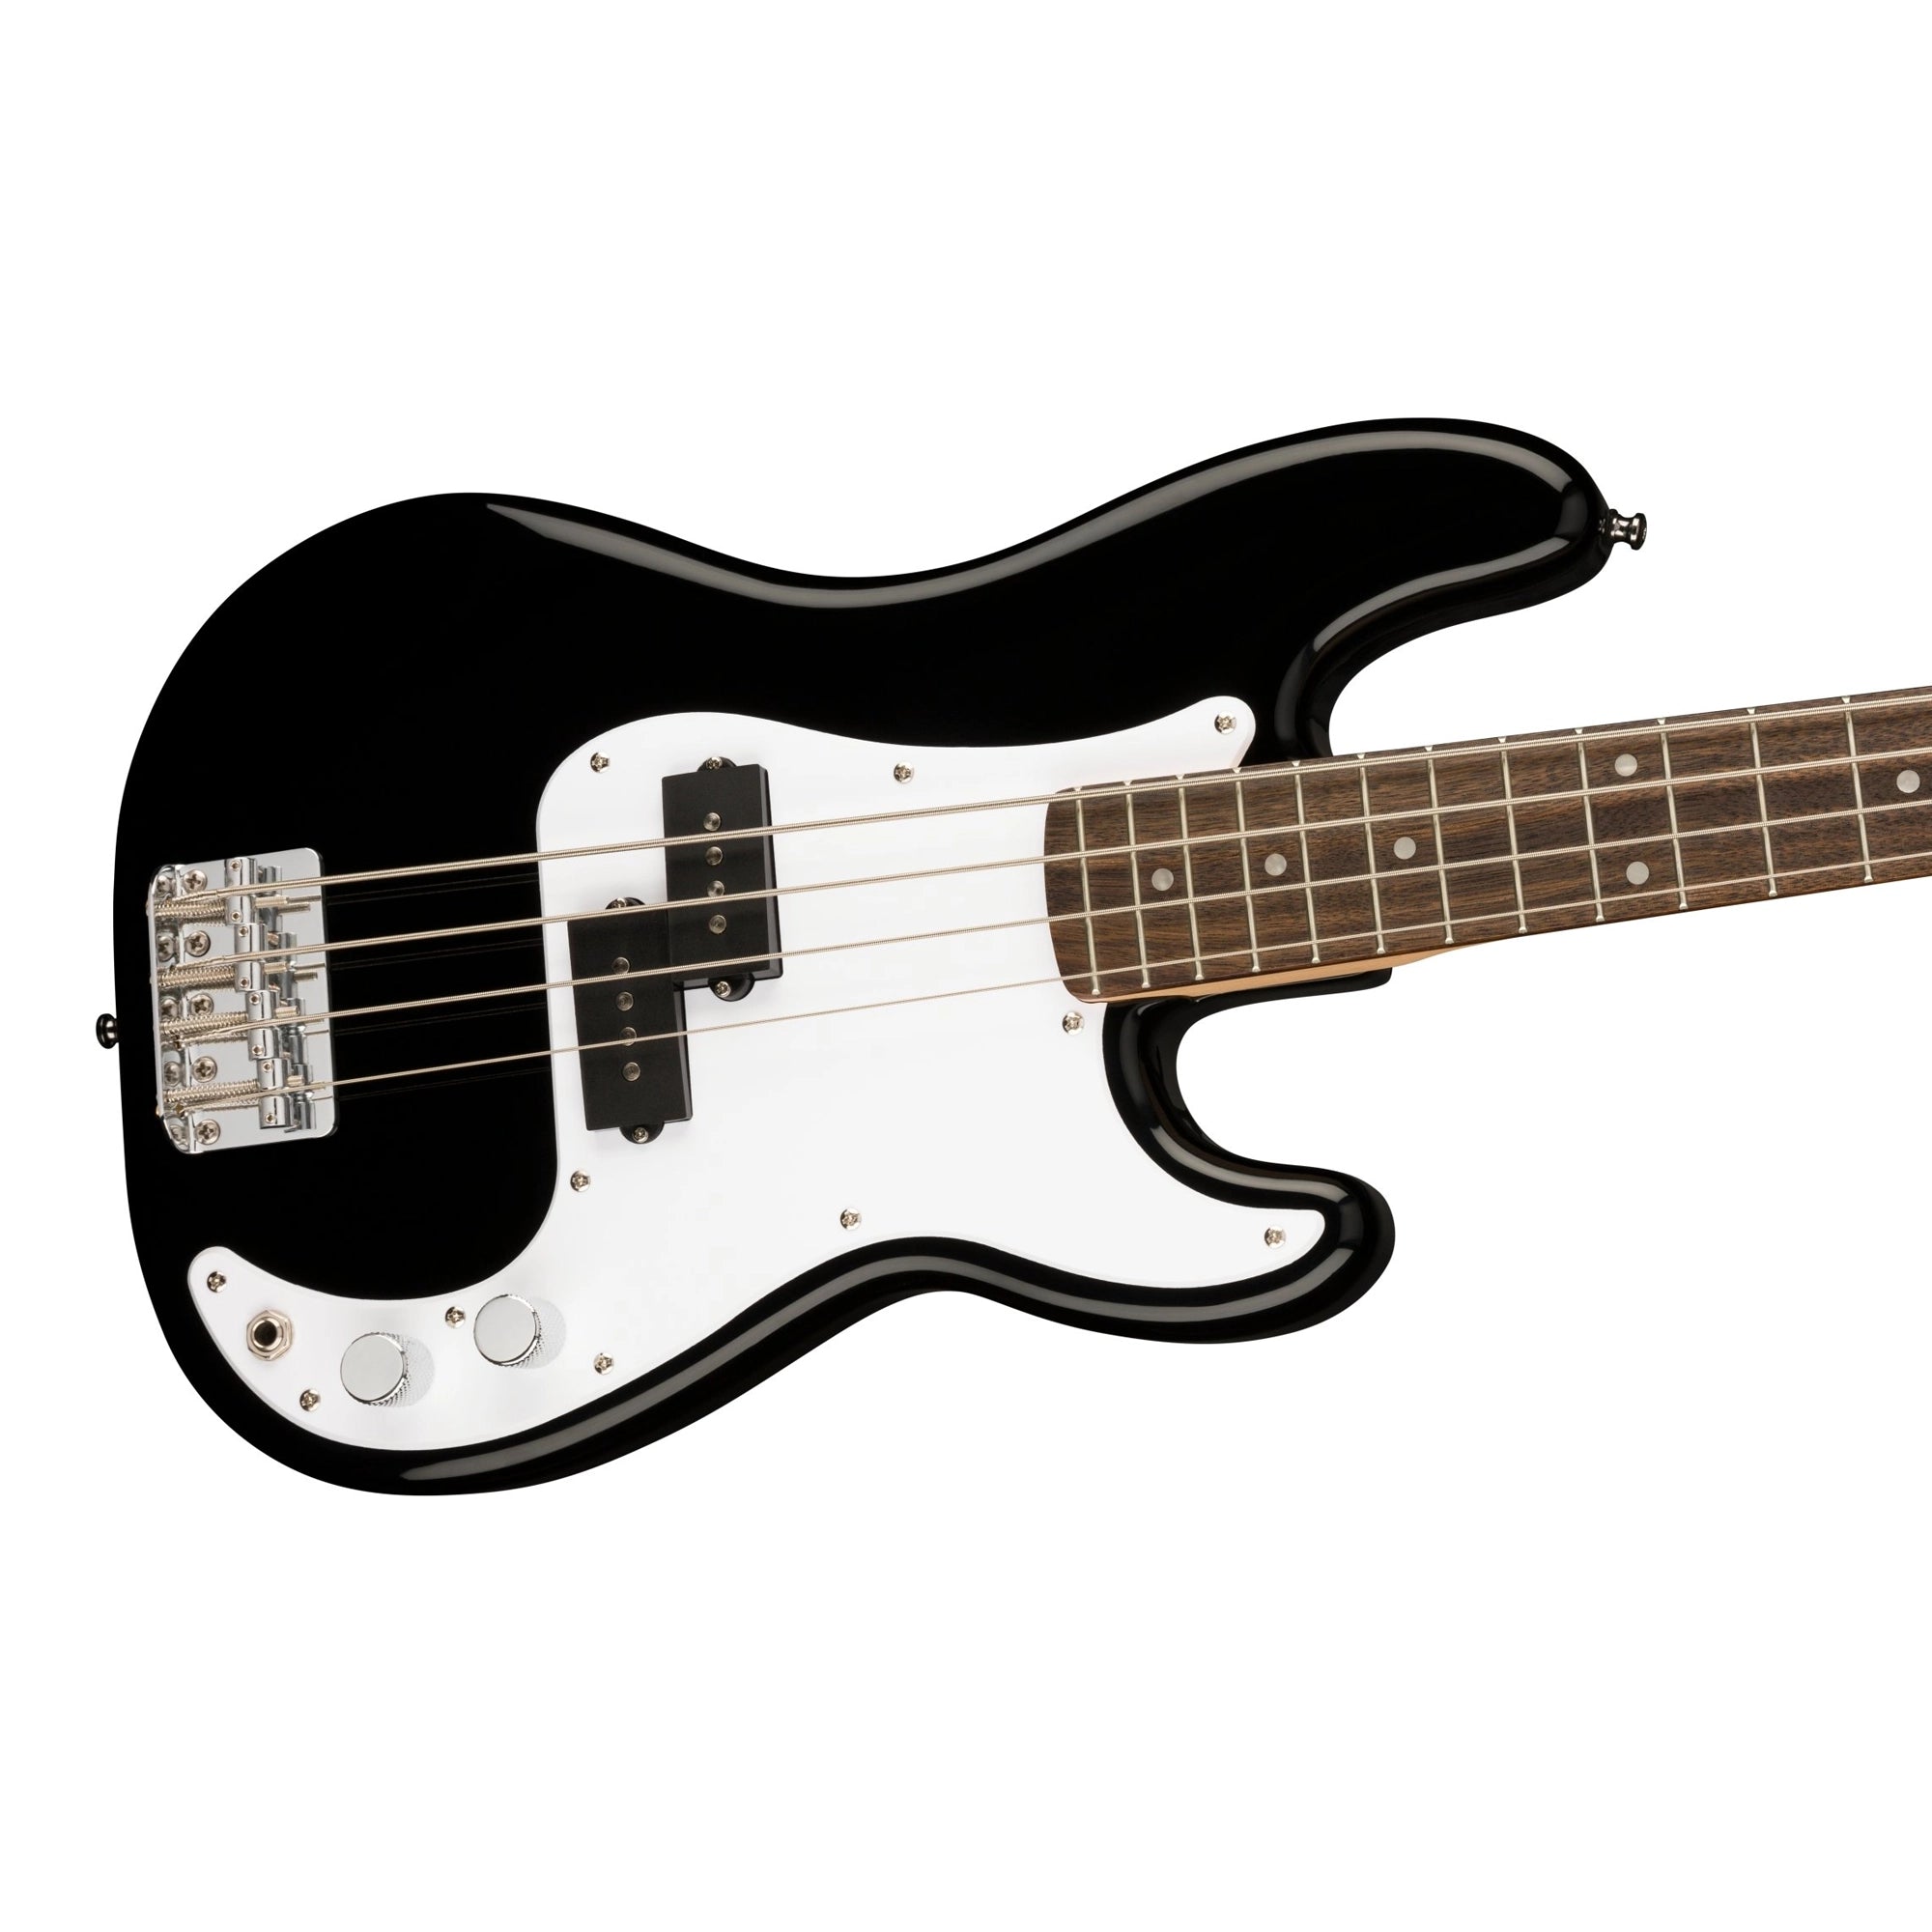 Squier Mini Precision 4 String Electric Bass